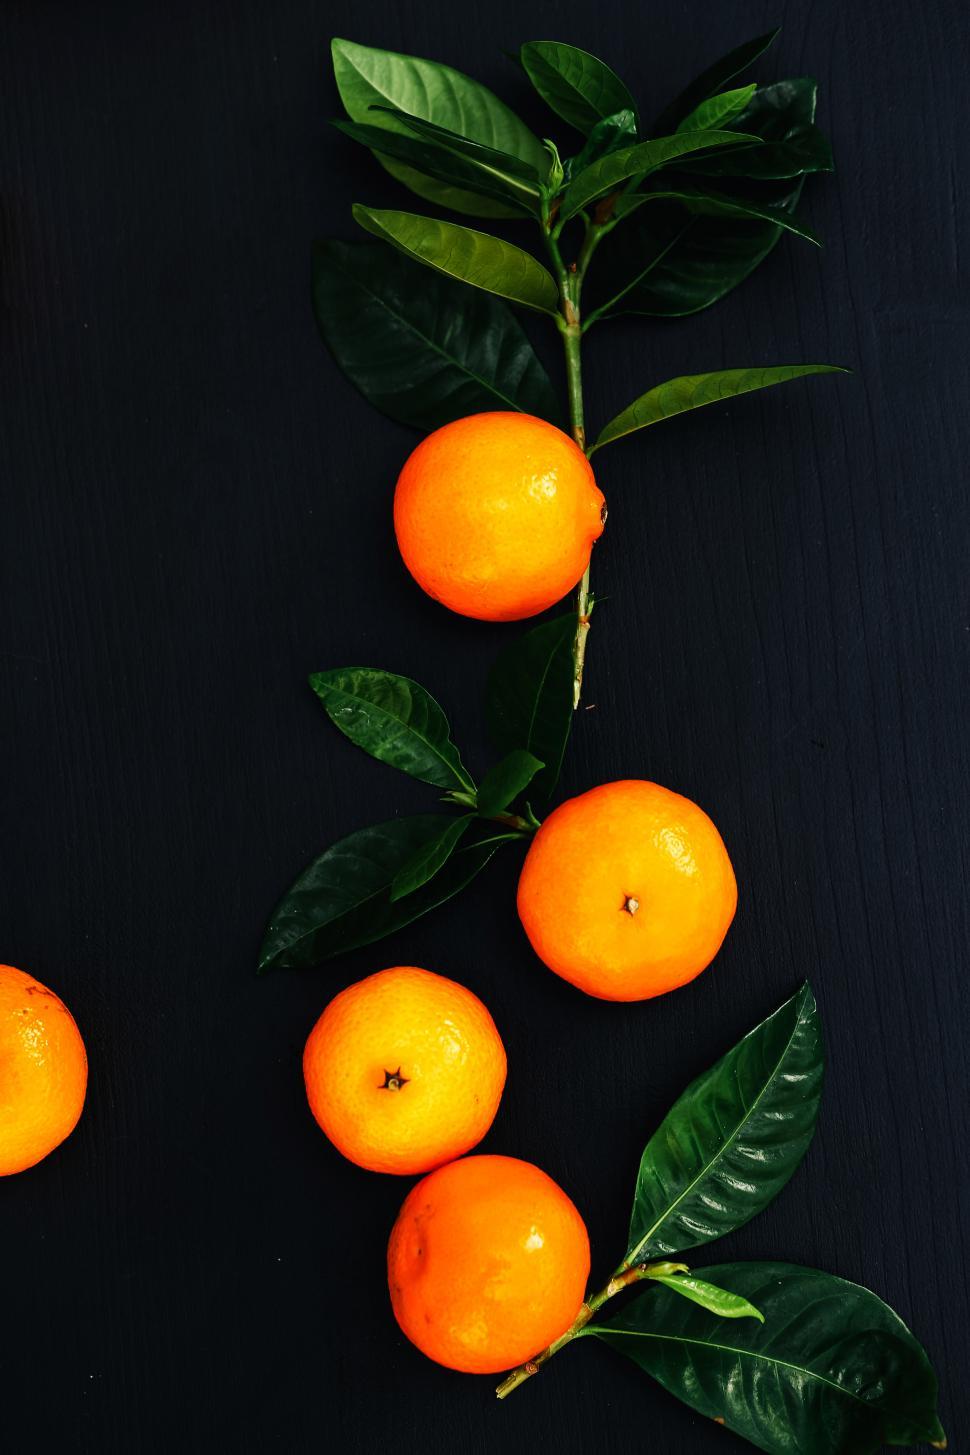 Free Image of Delicious mandarin oranges on the tree, dark background 